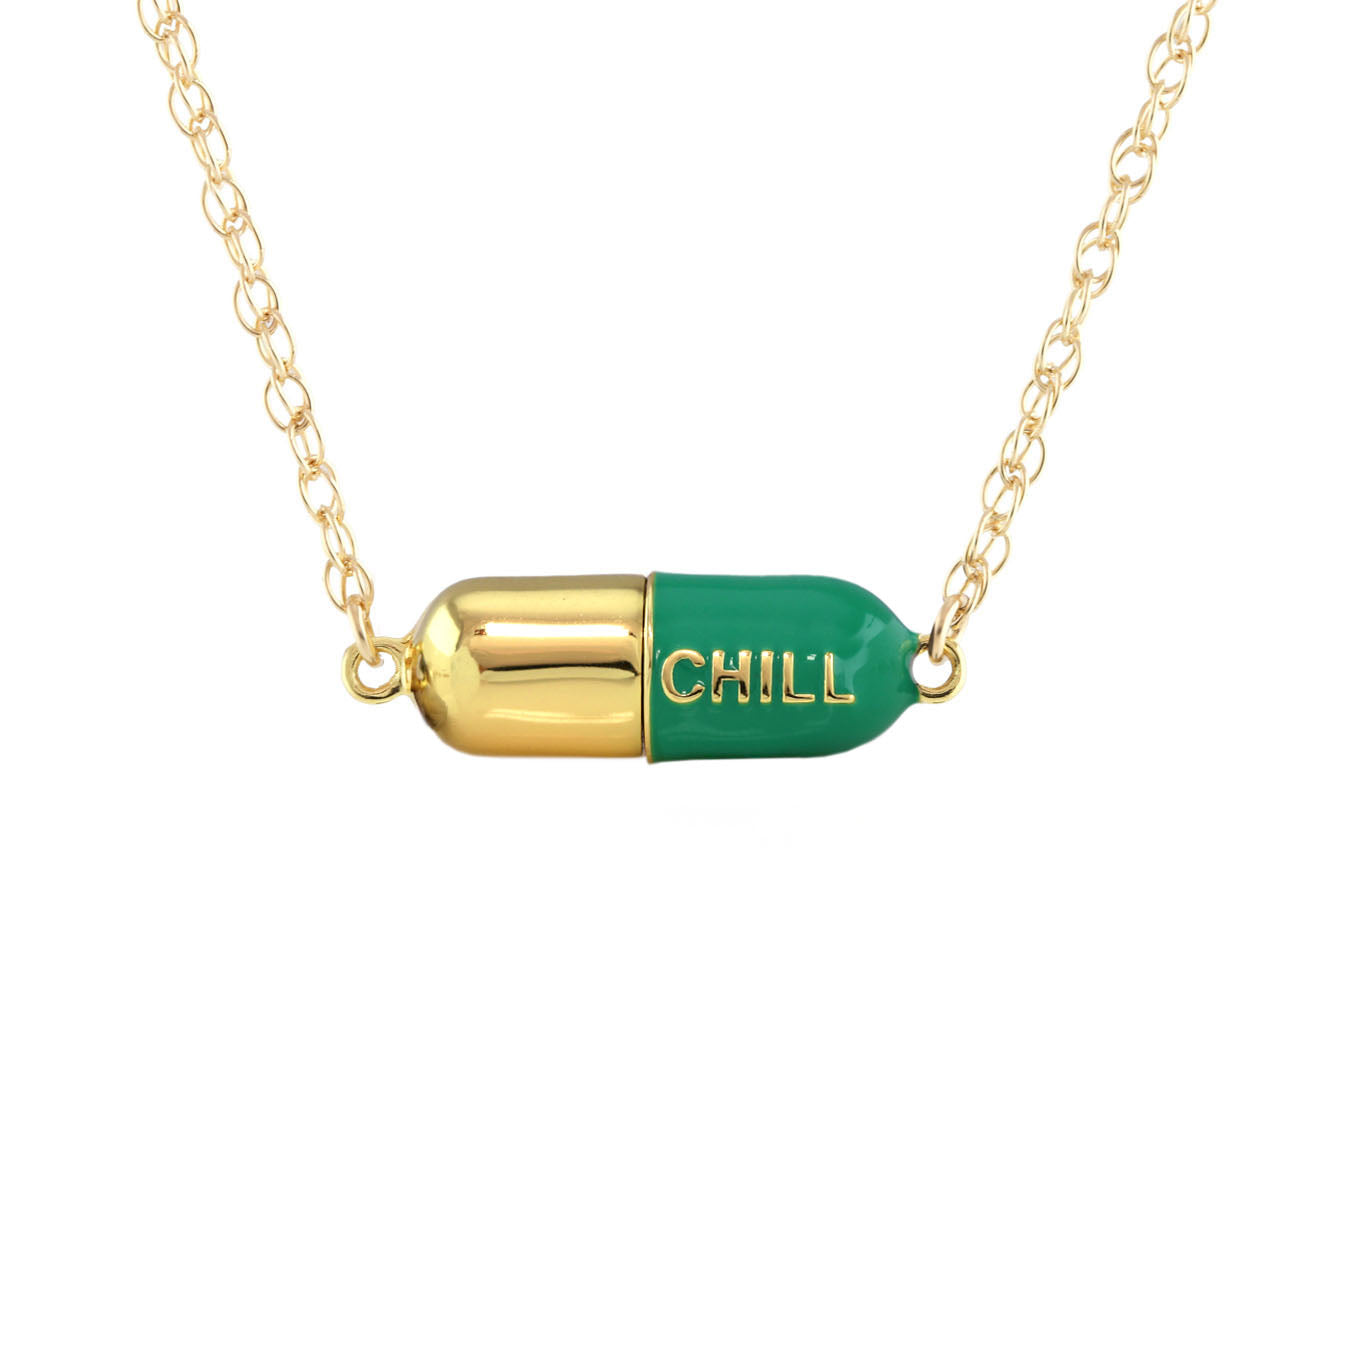 Big Chill Pill Chain Necklace